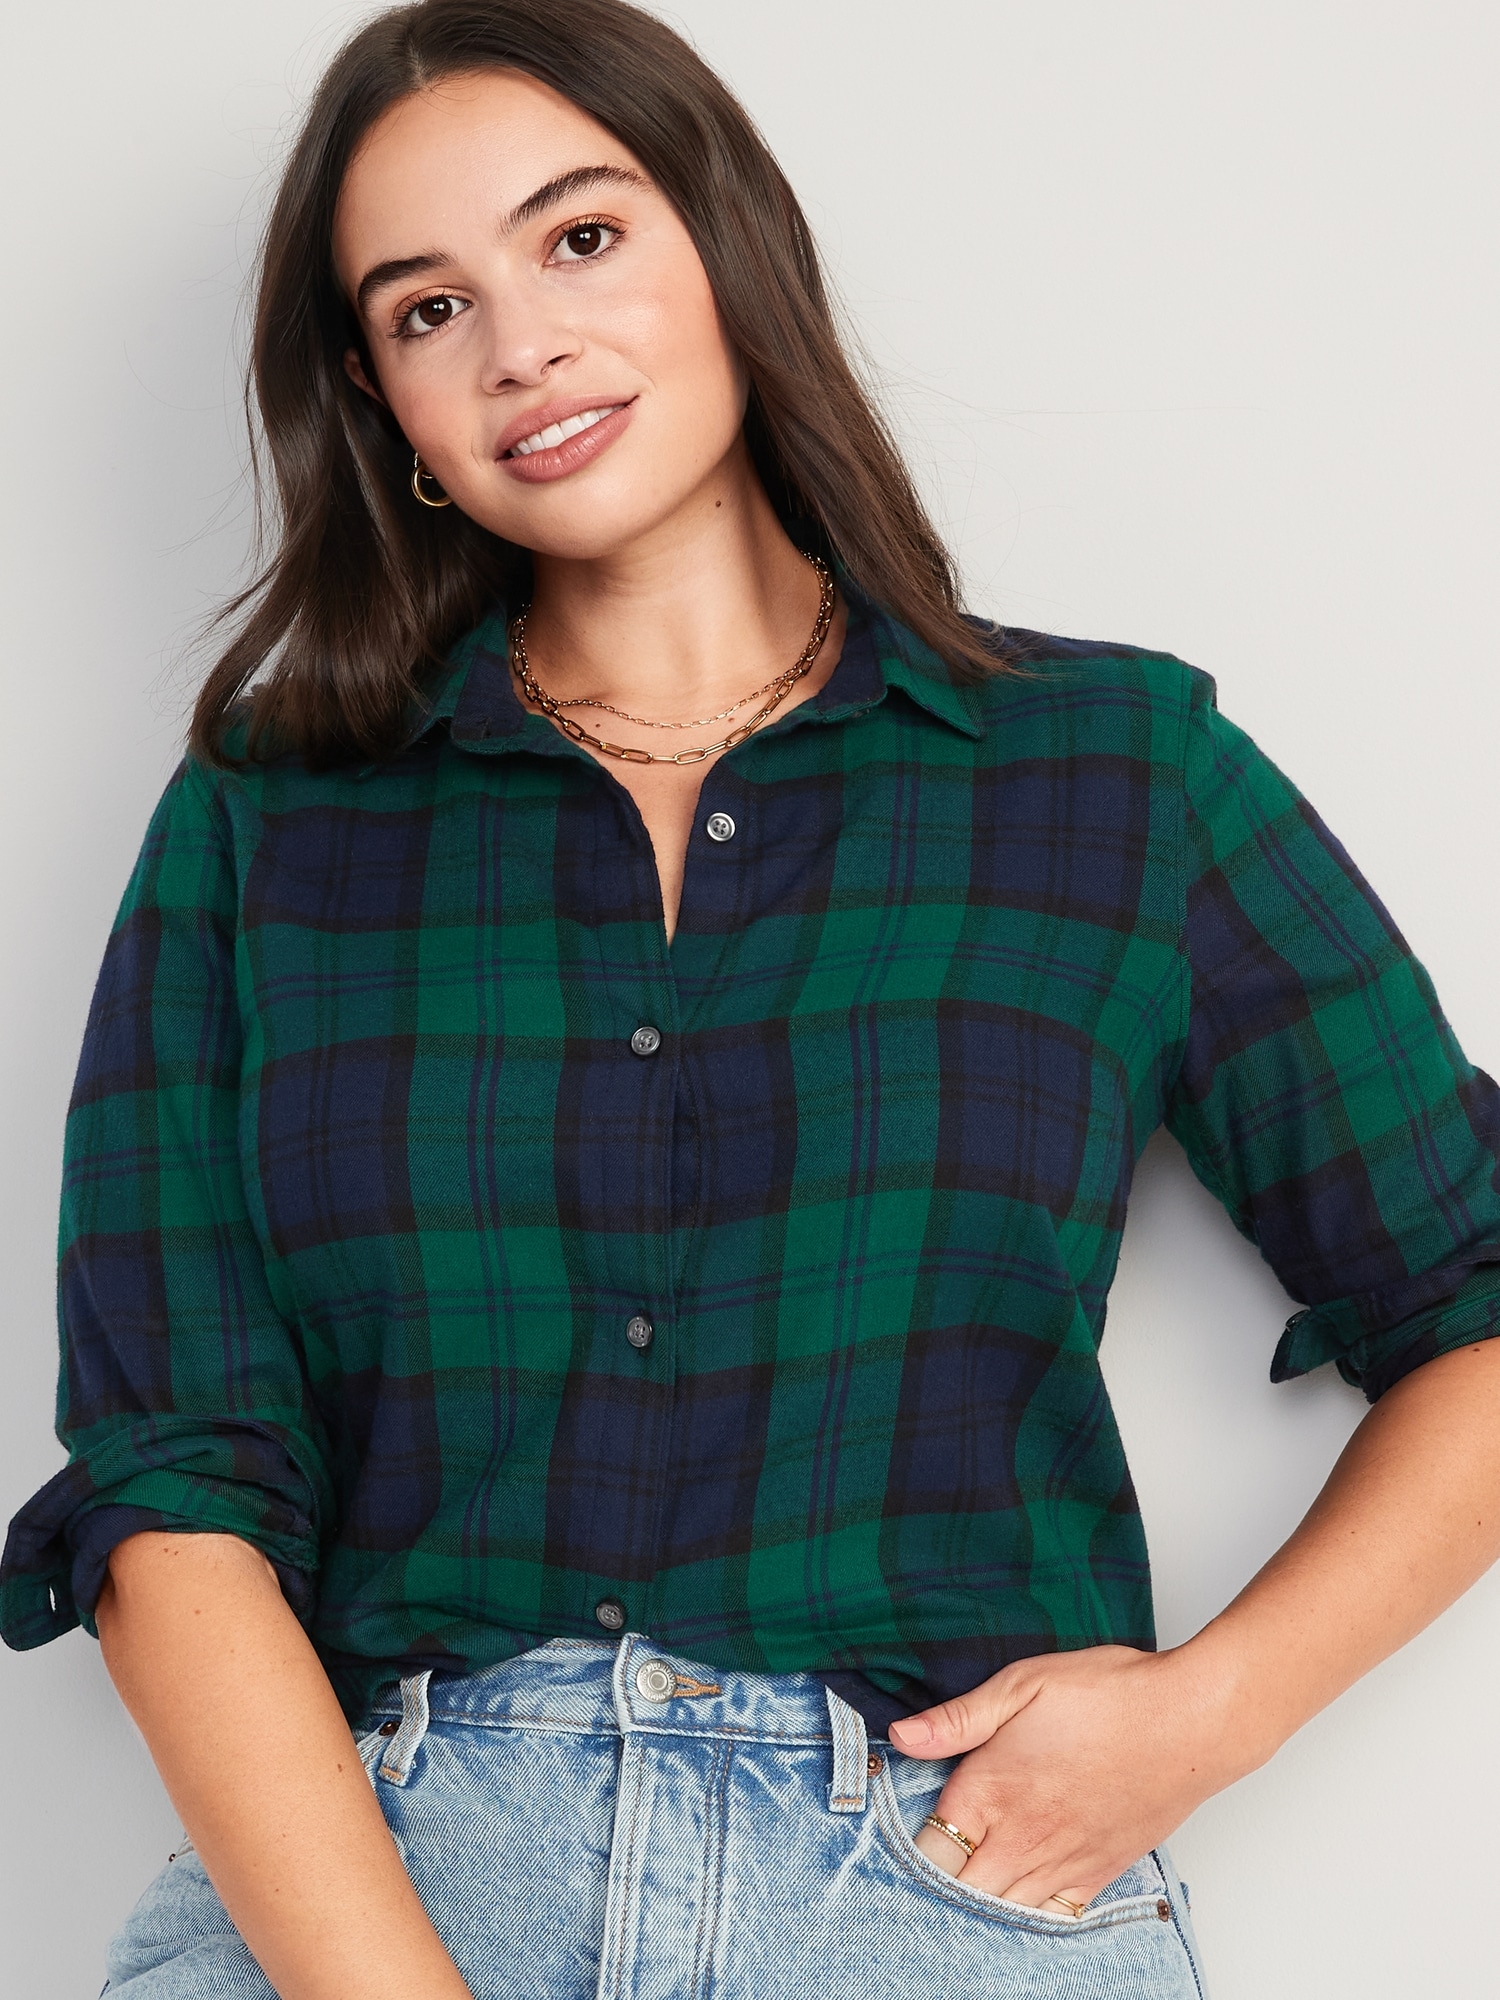 Long-Sleeve Plaid Flannel Shirt for Women